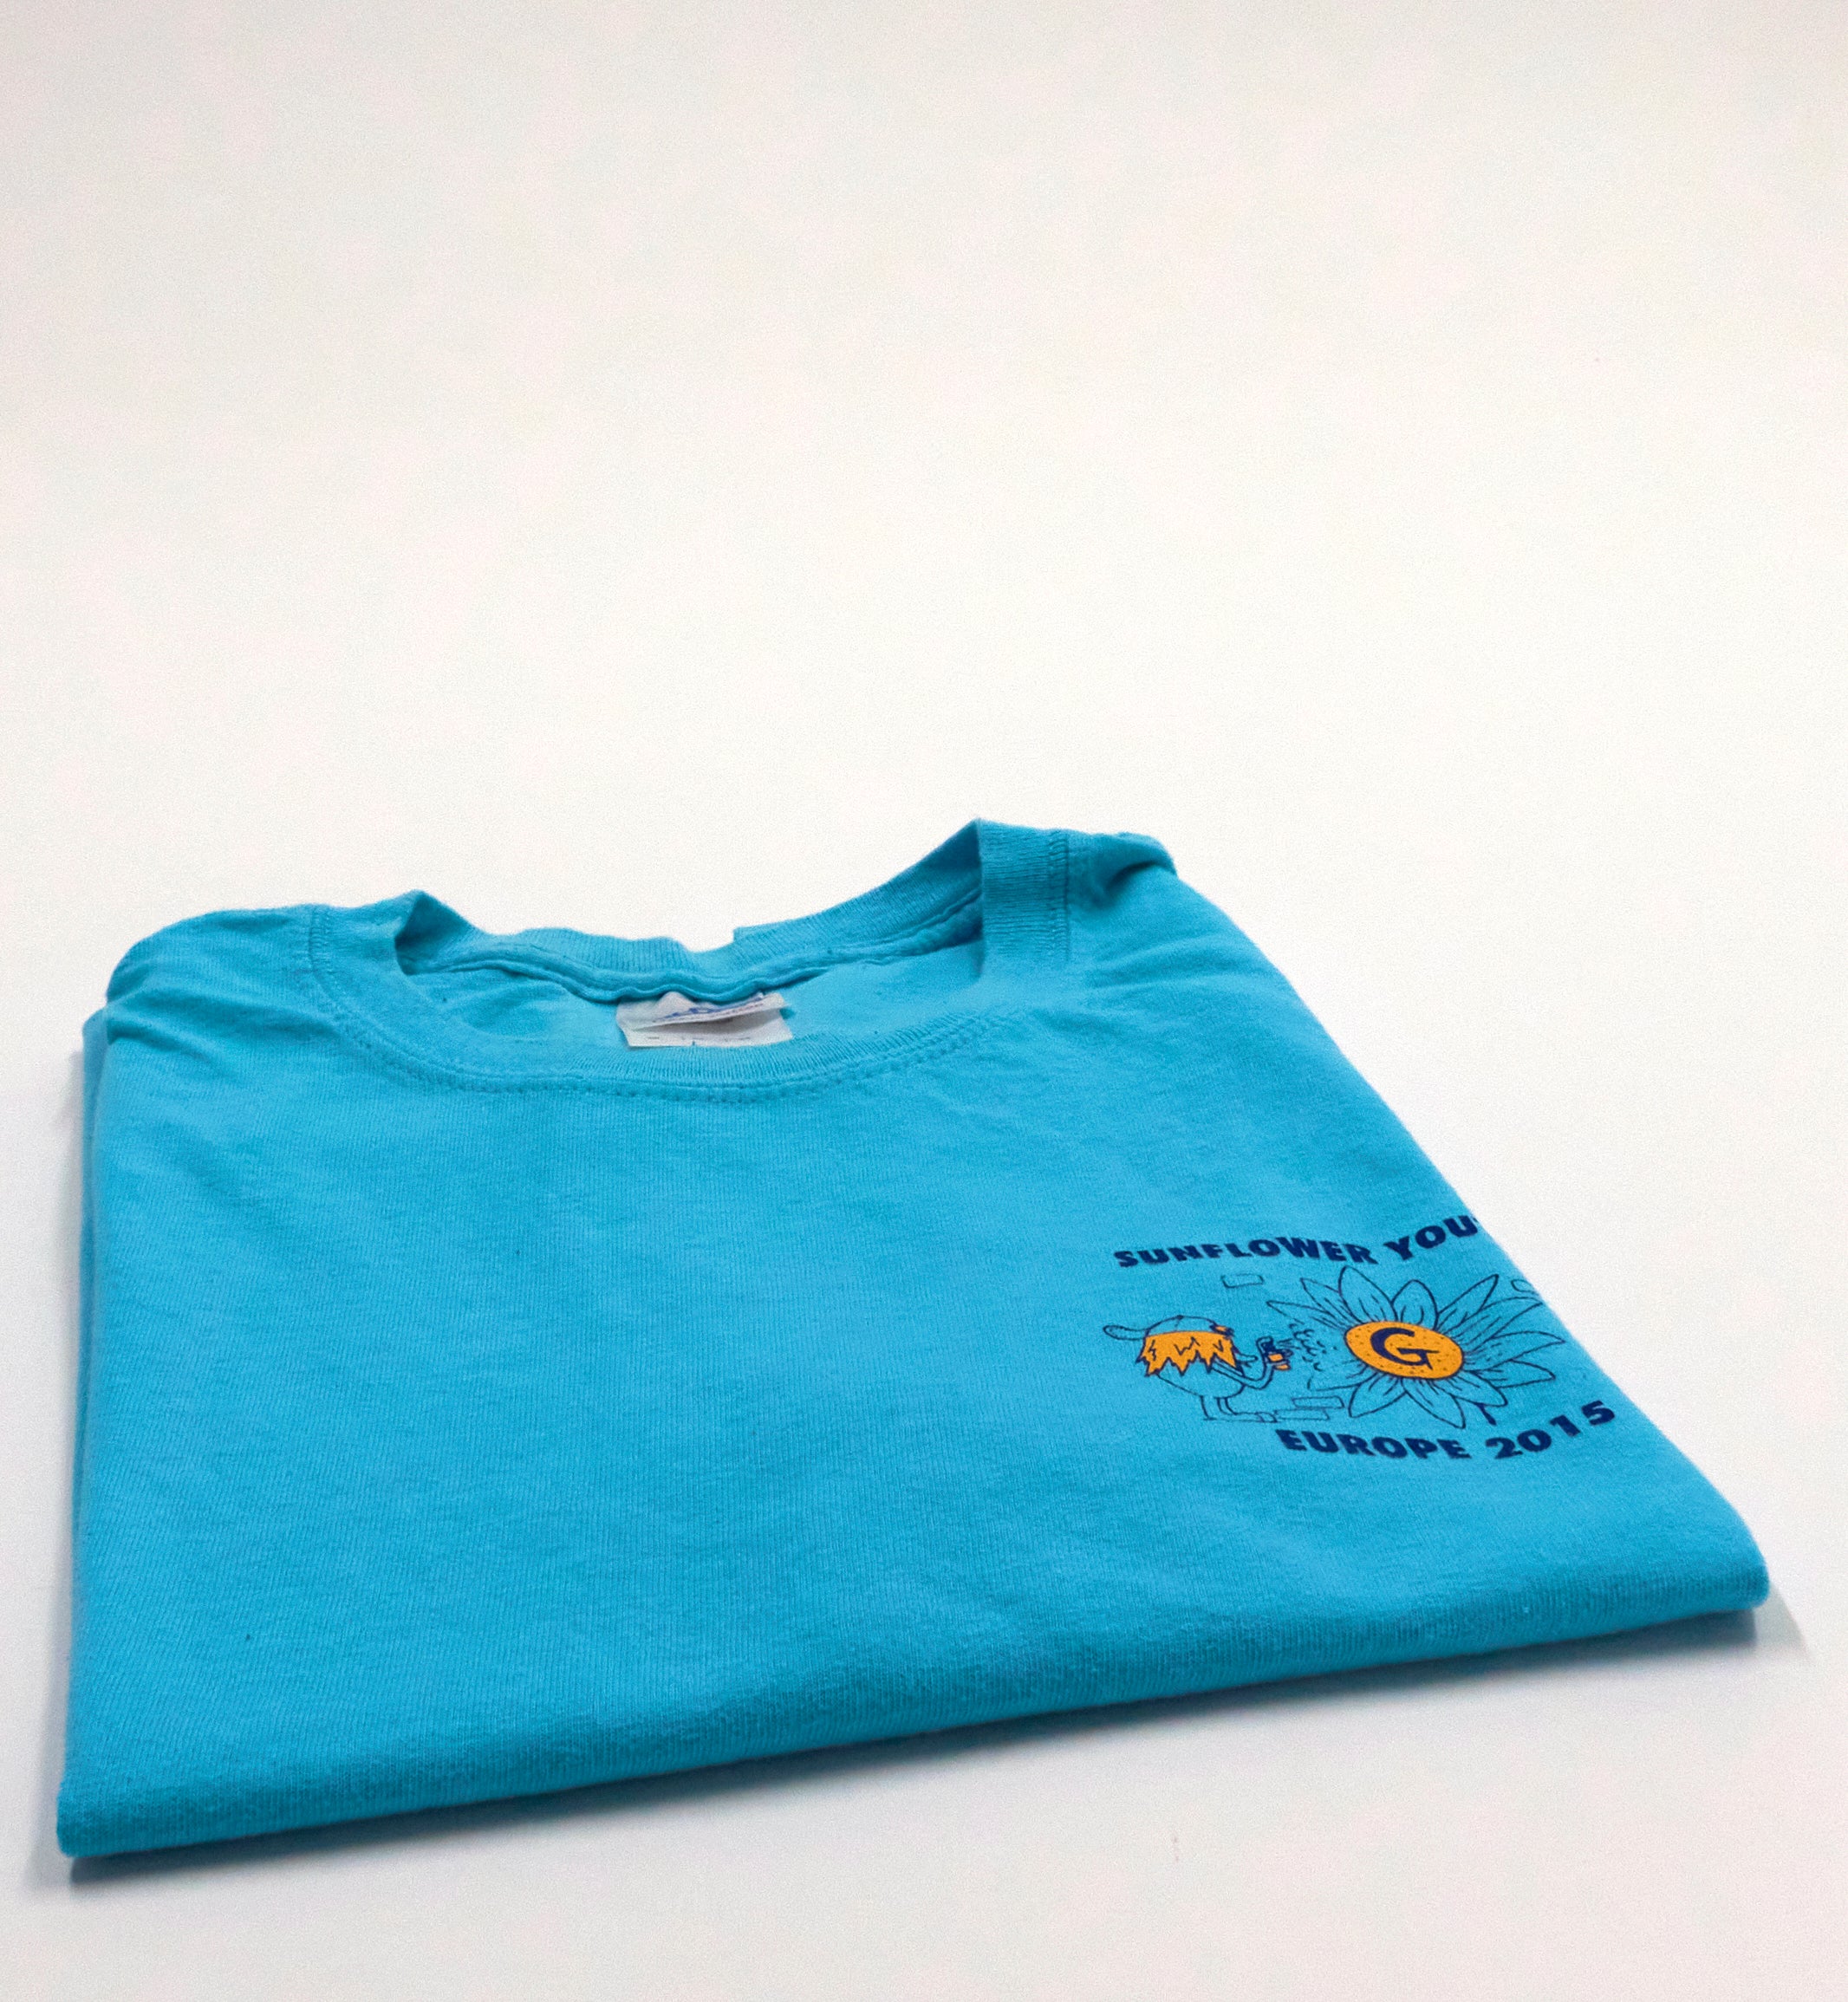 Give – Sunflower Youth Europe 2015 Tour Shirt Size Medium